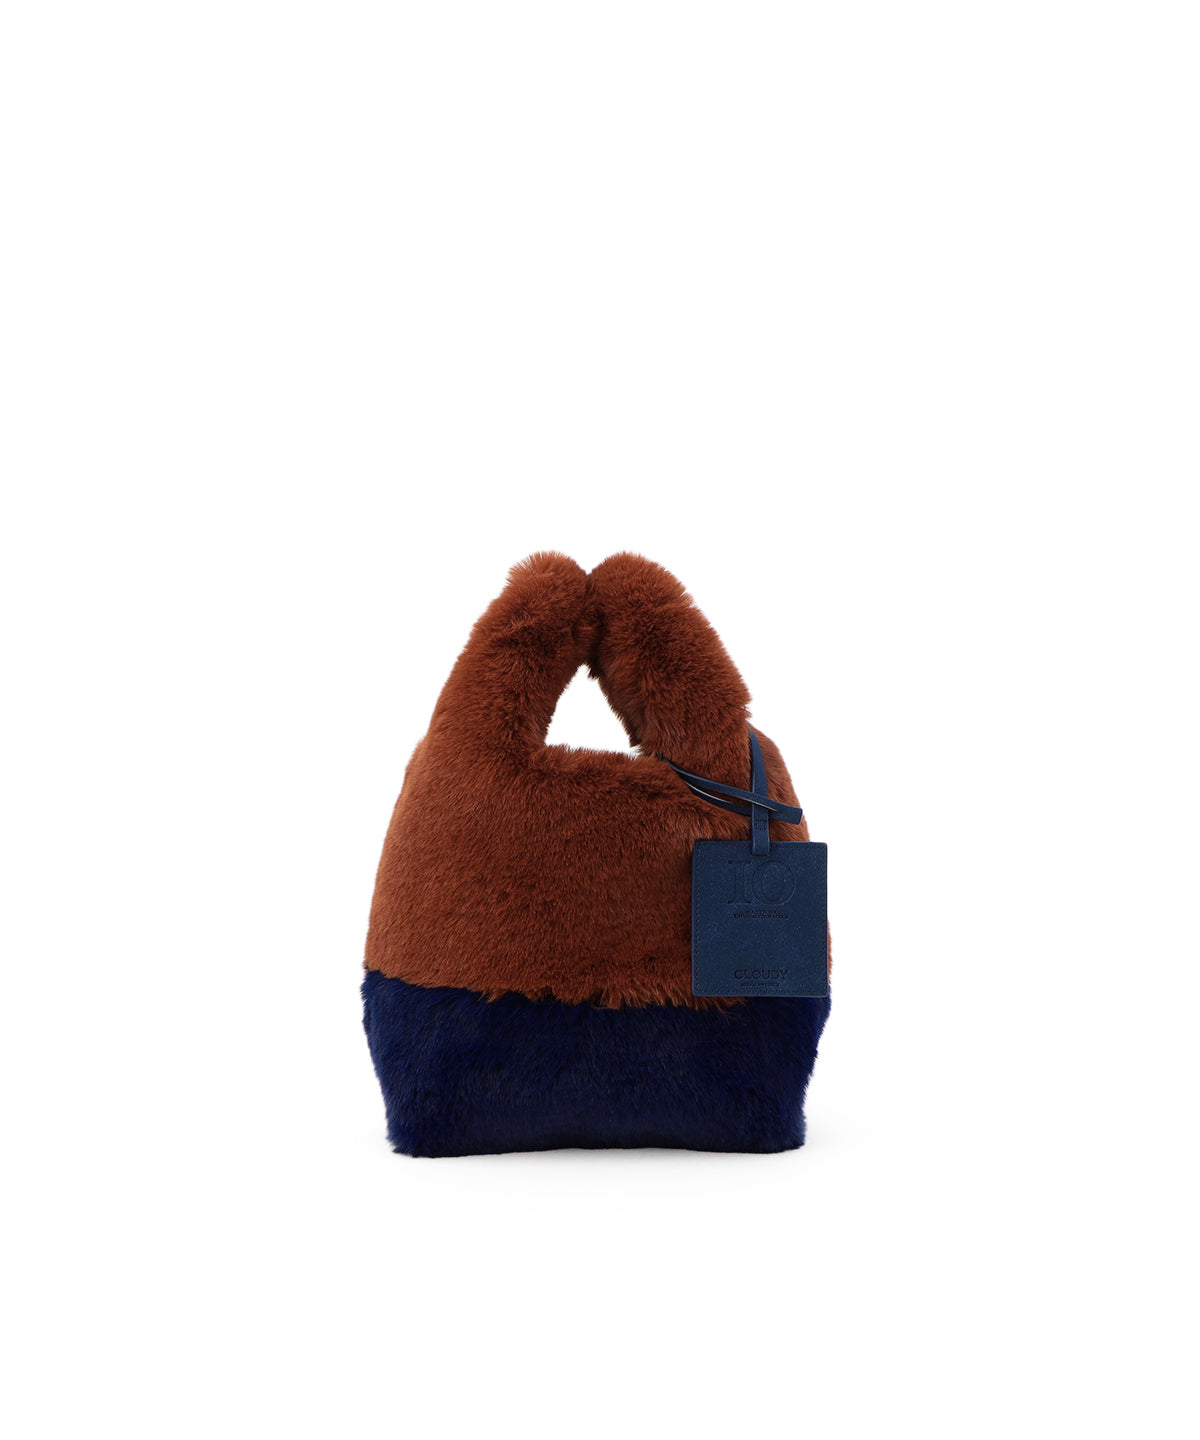 Eco Fur Convenience Bag (Small) BROWN×NAVY